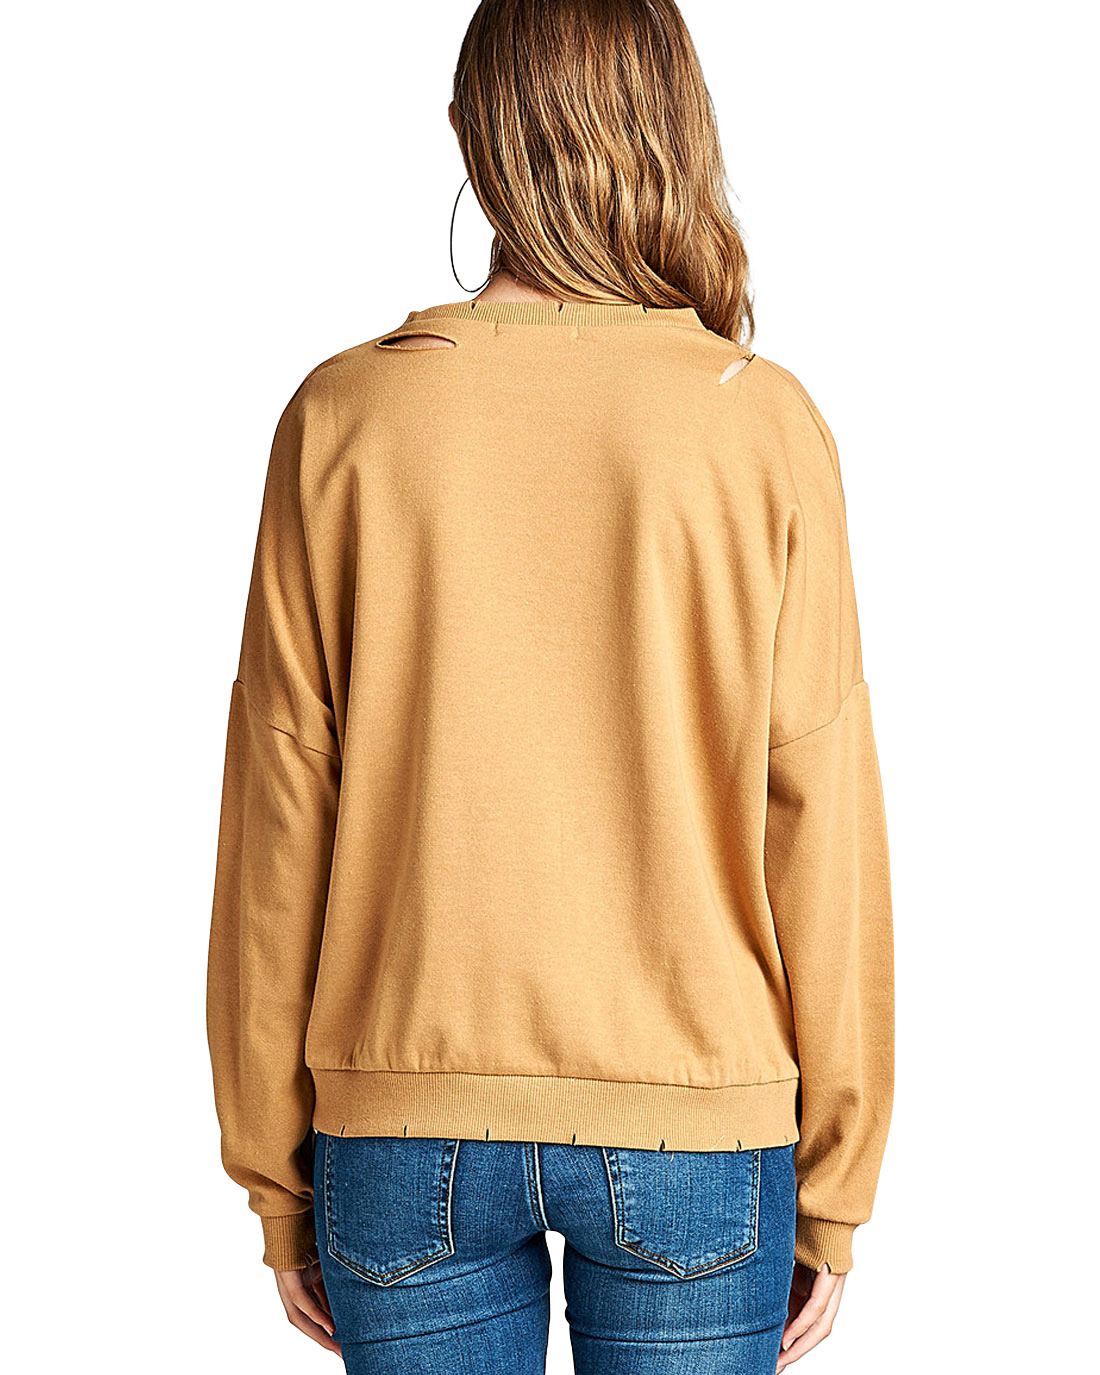 Dropped shoulders distressed cutout design sweatshirt